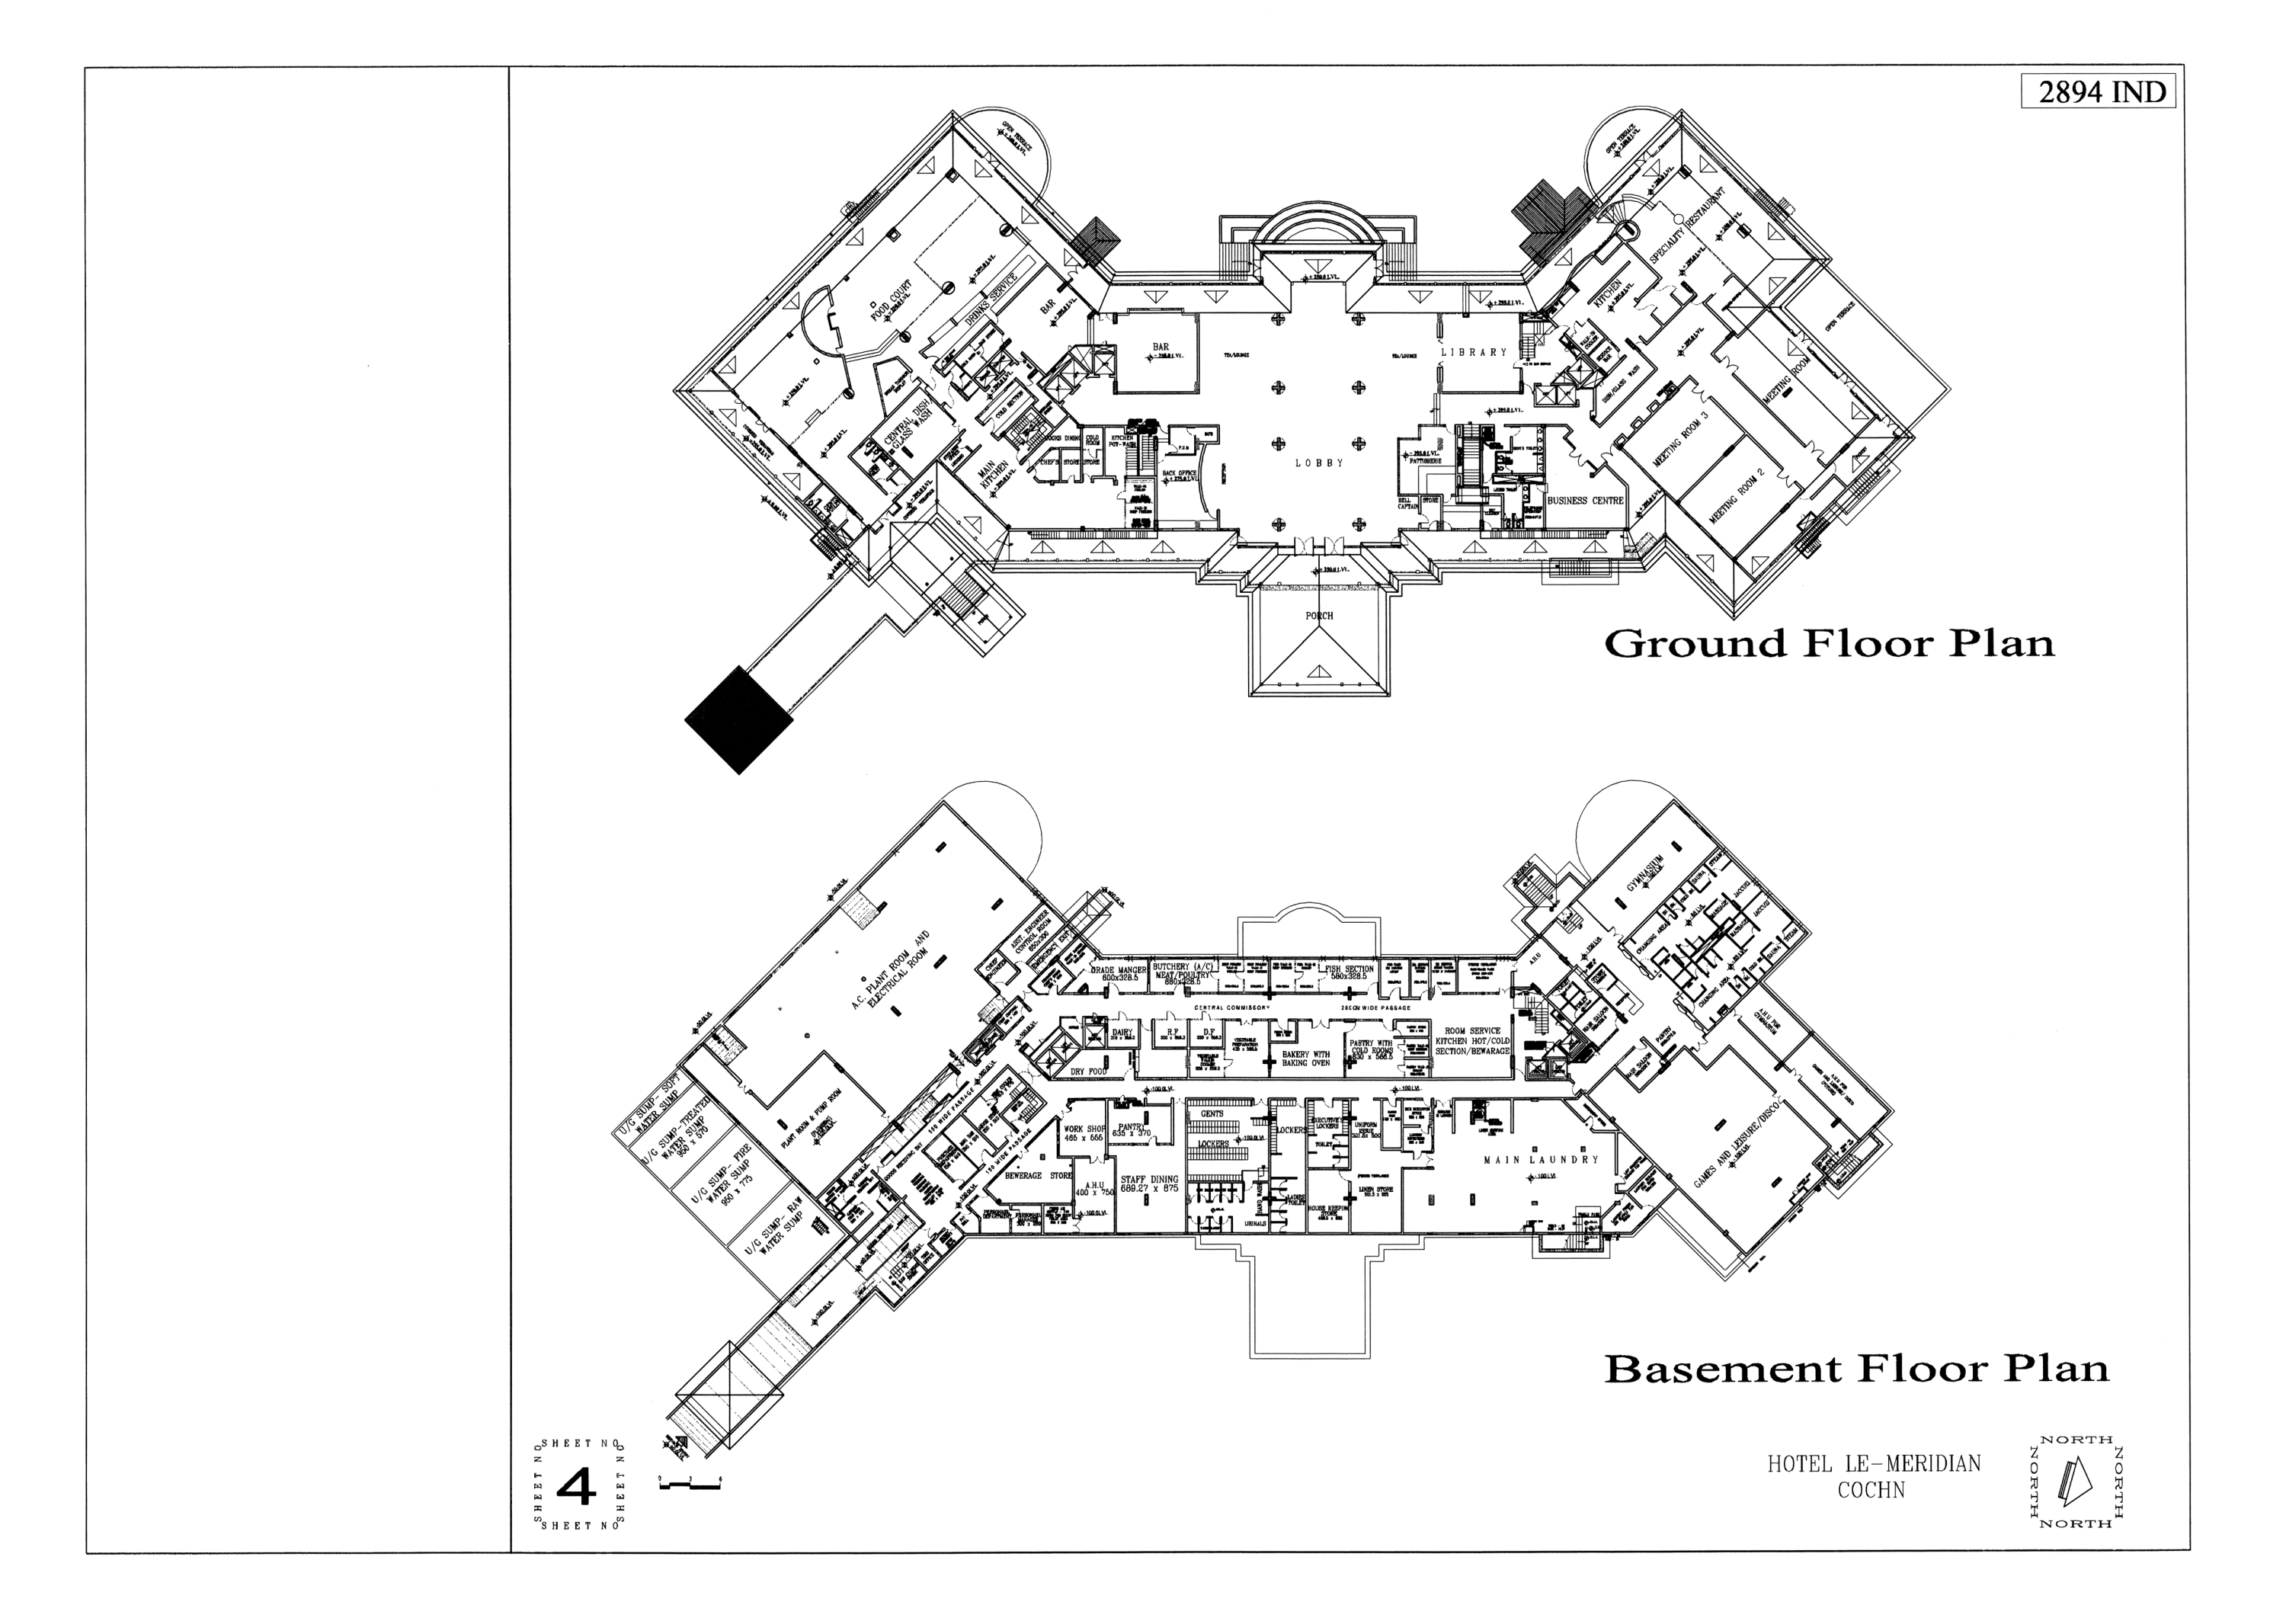 Presentation panel, hotel, basement and ground floor plans